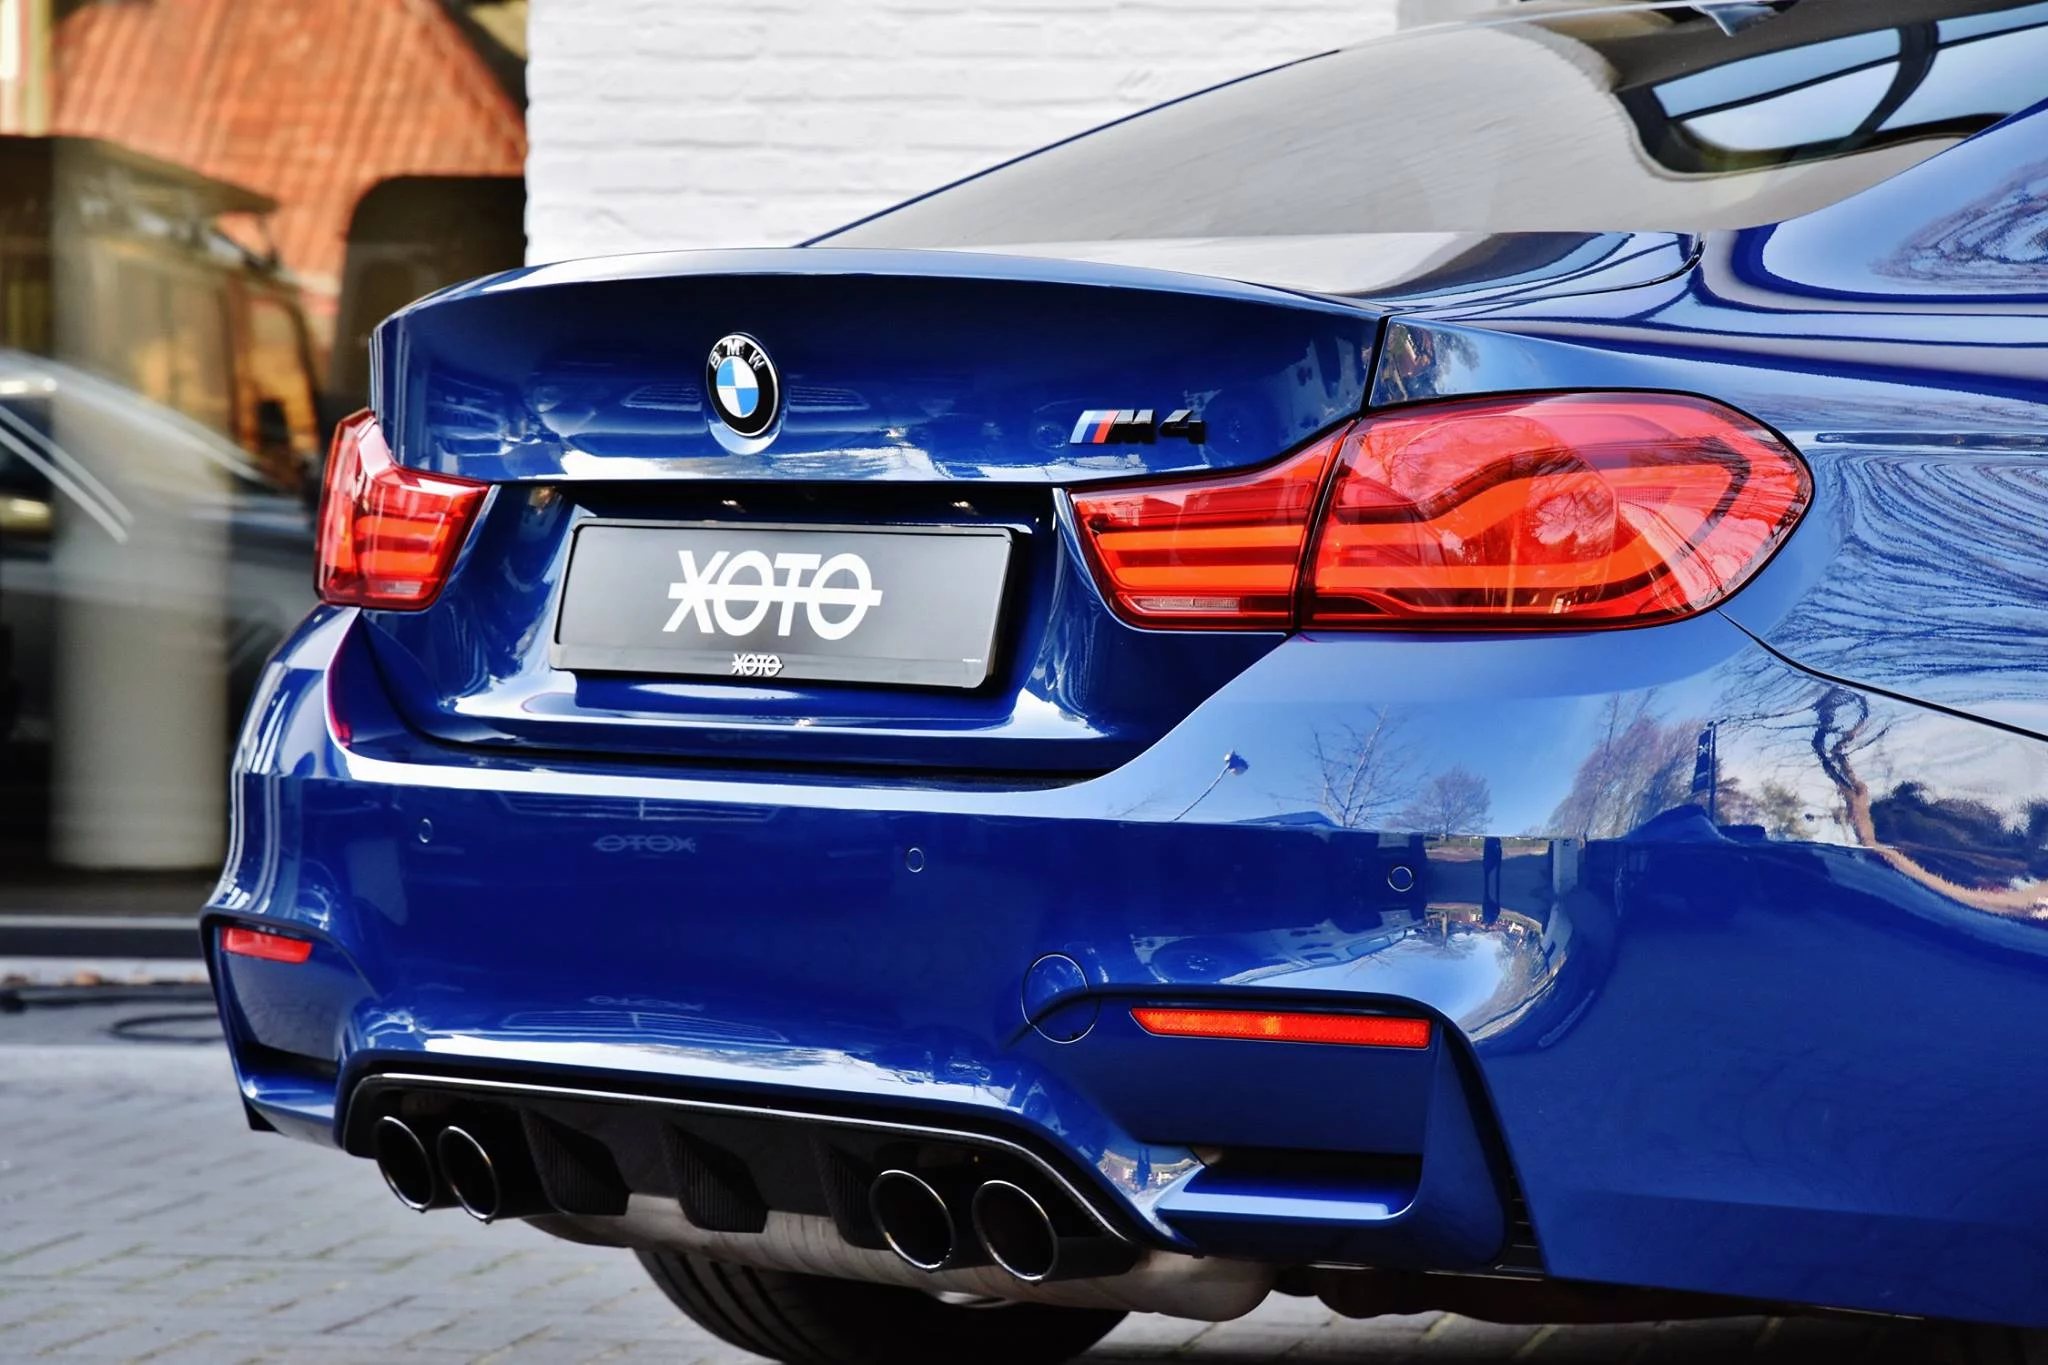 Avus Blue BMW M4